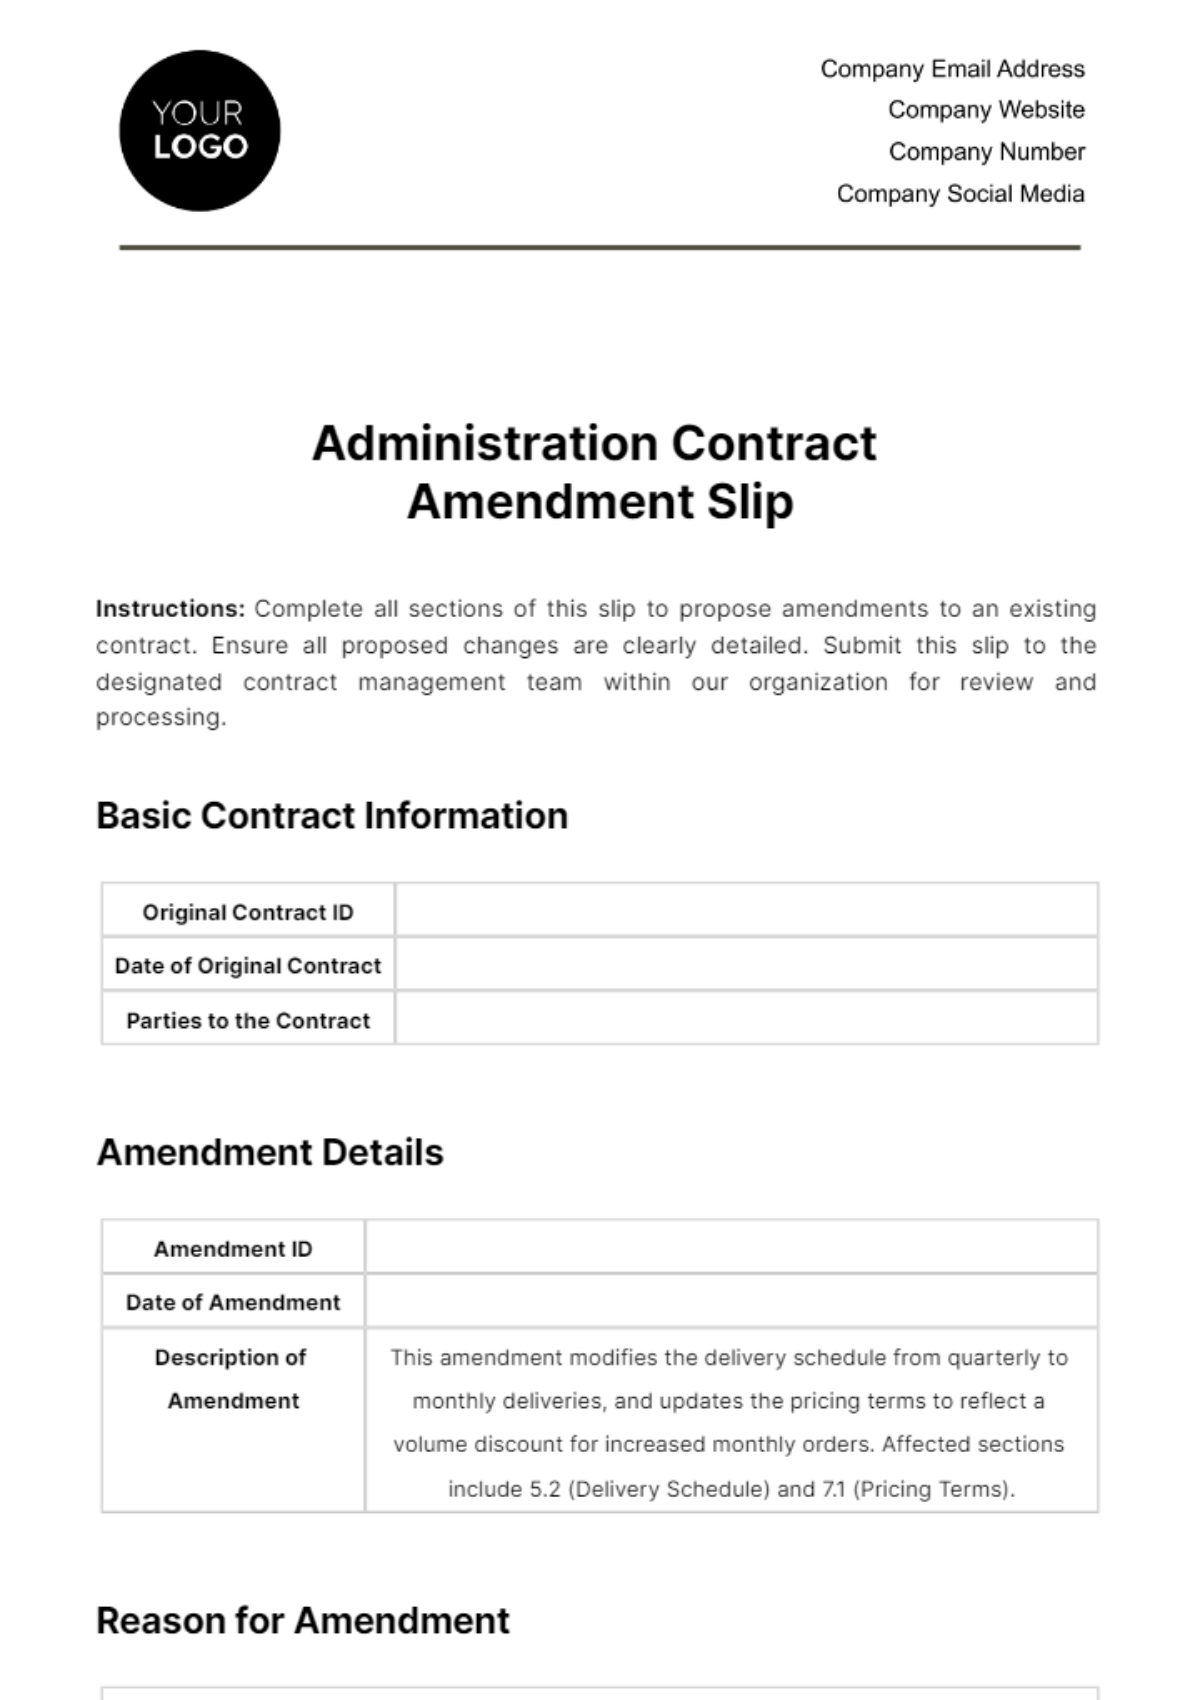 Free Administration Contract Amendment Slip Template